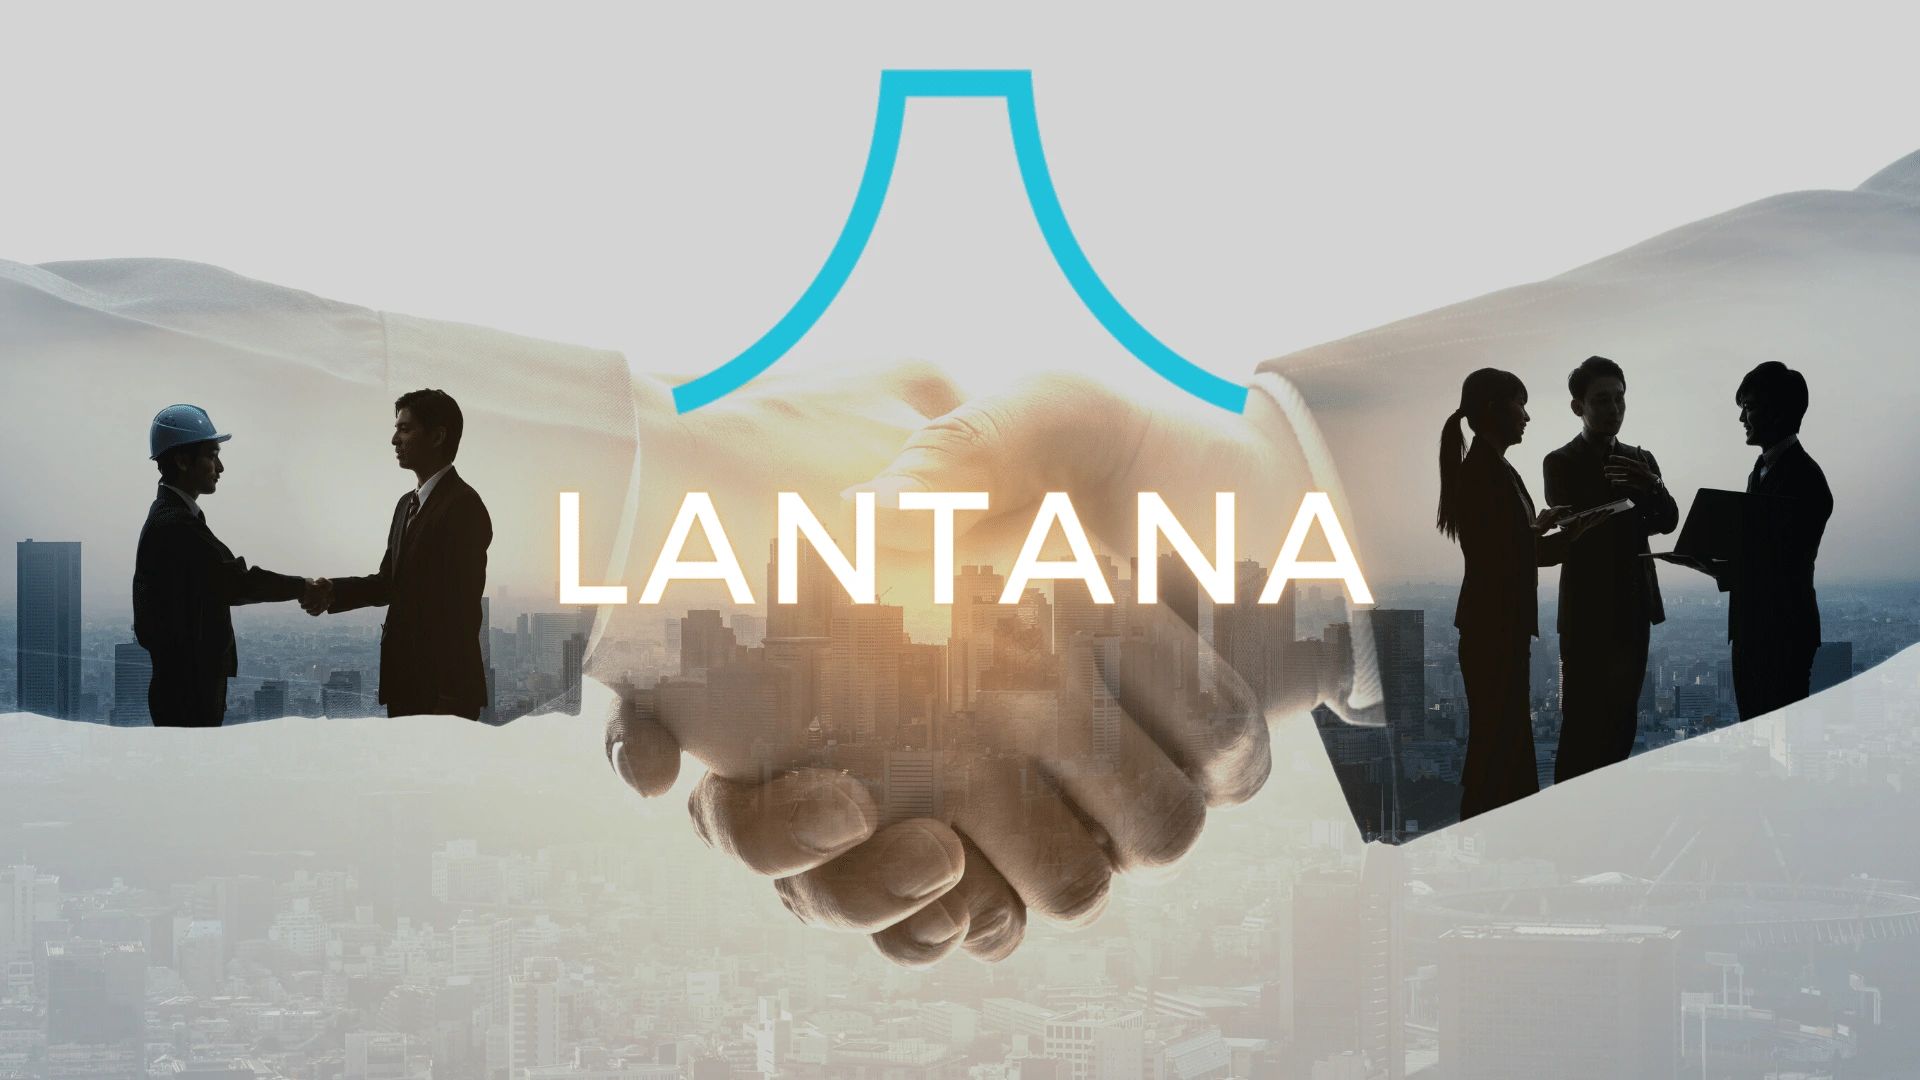 LANTANA partnerships